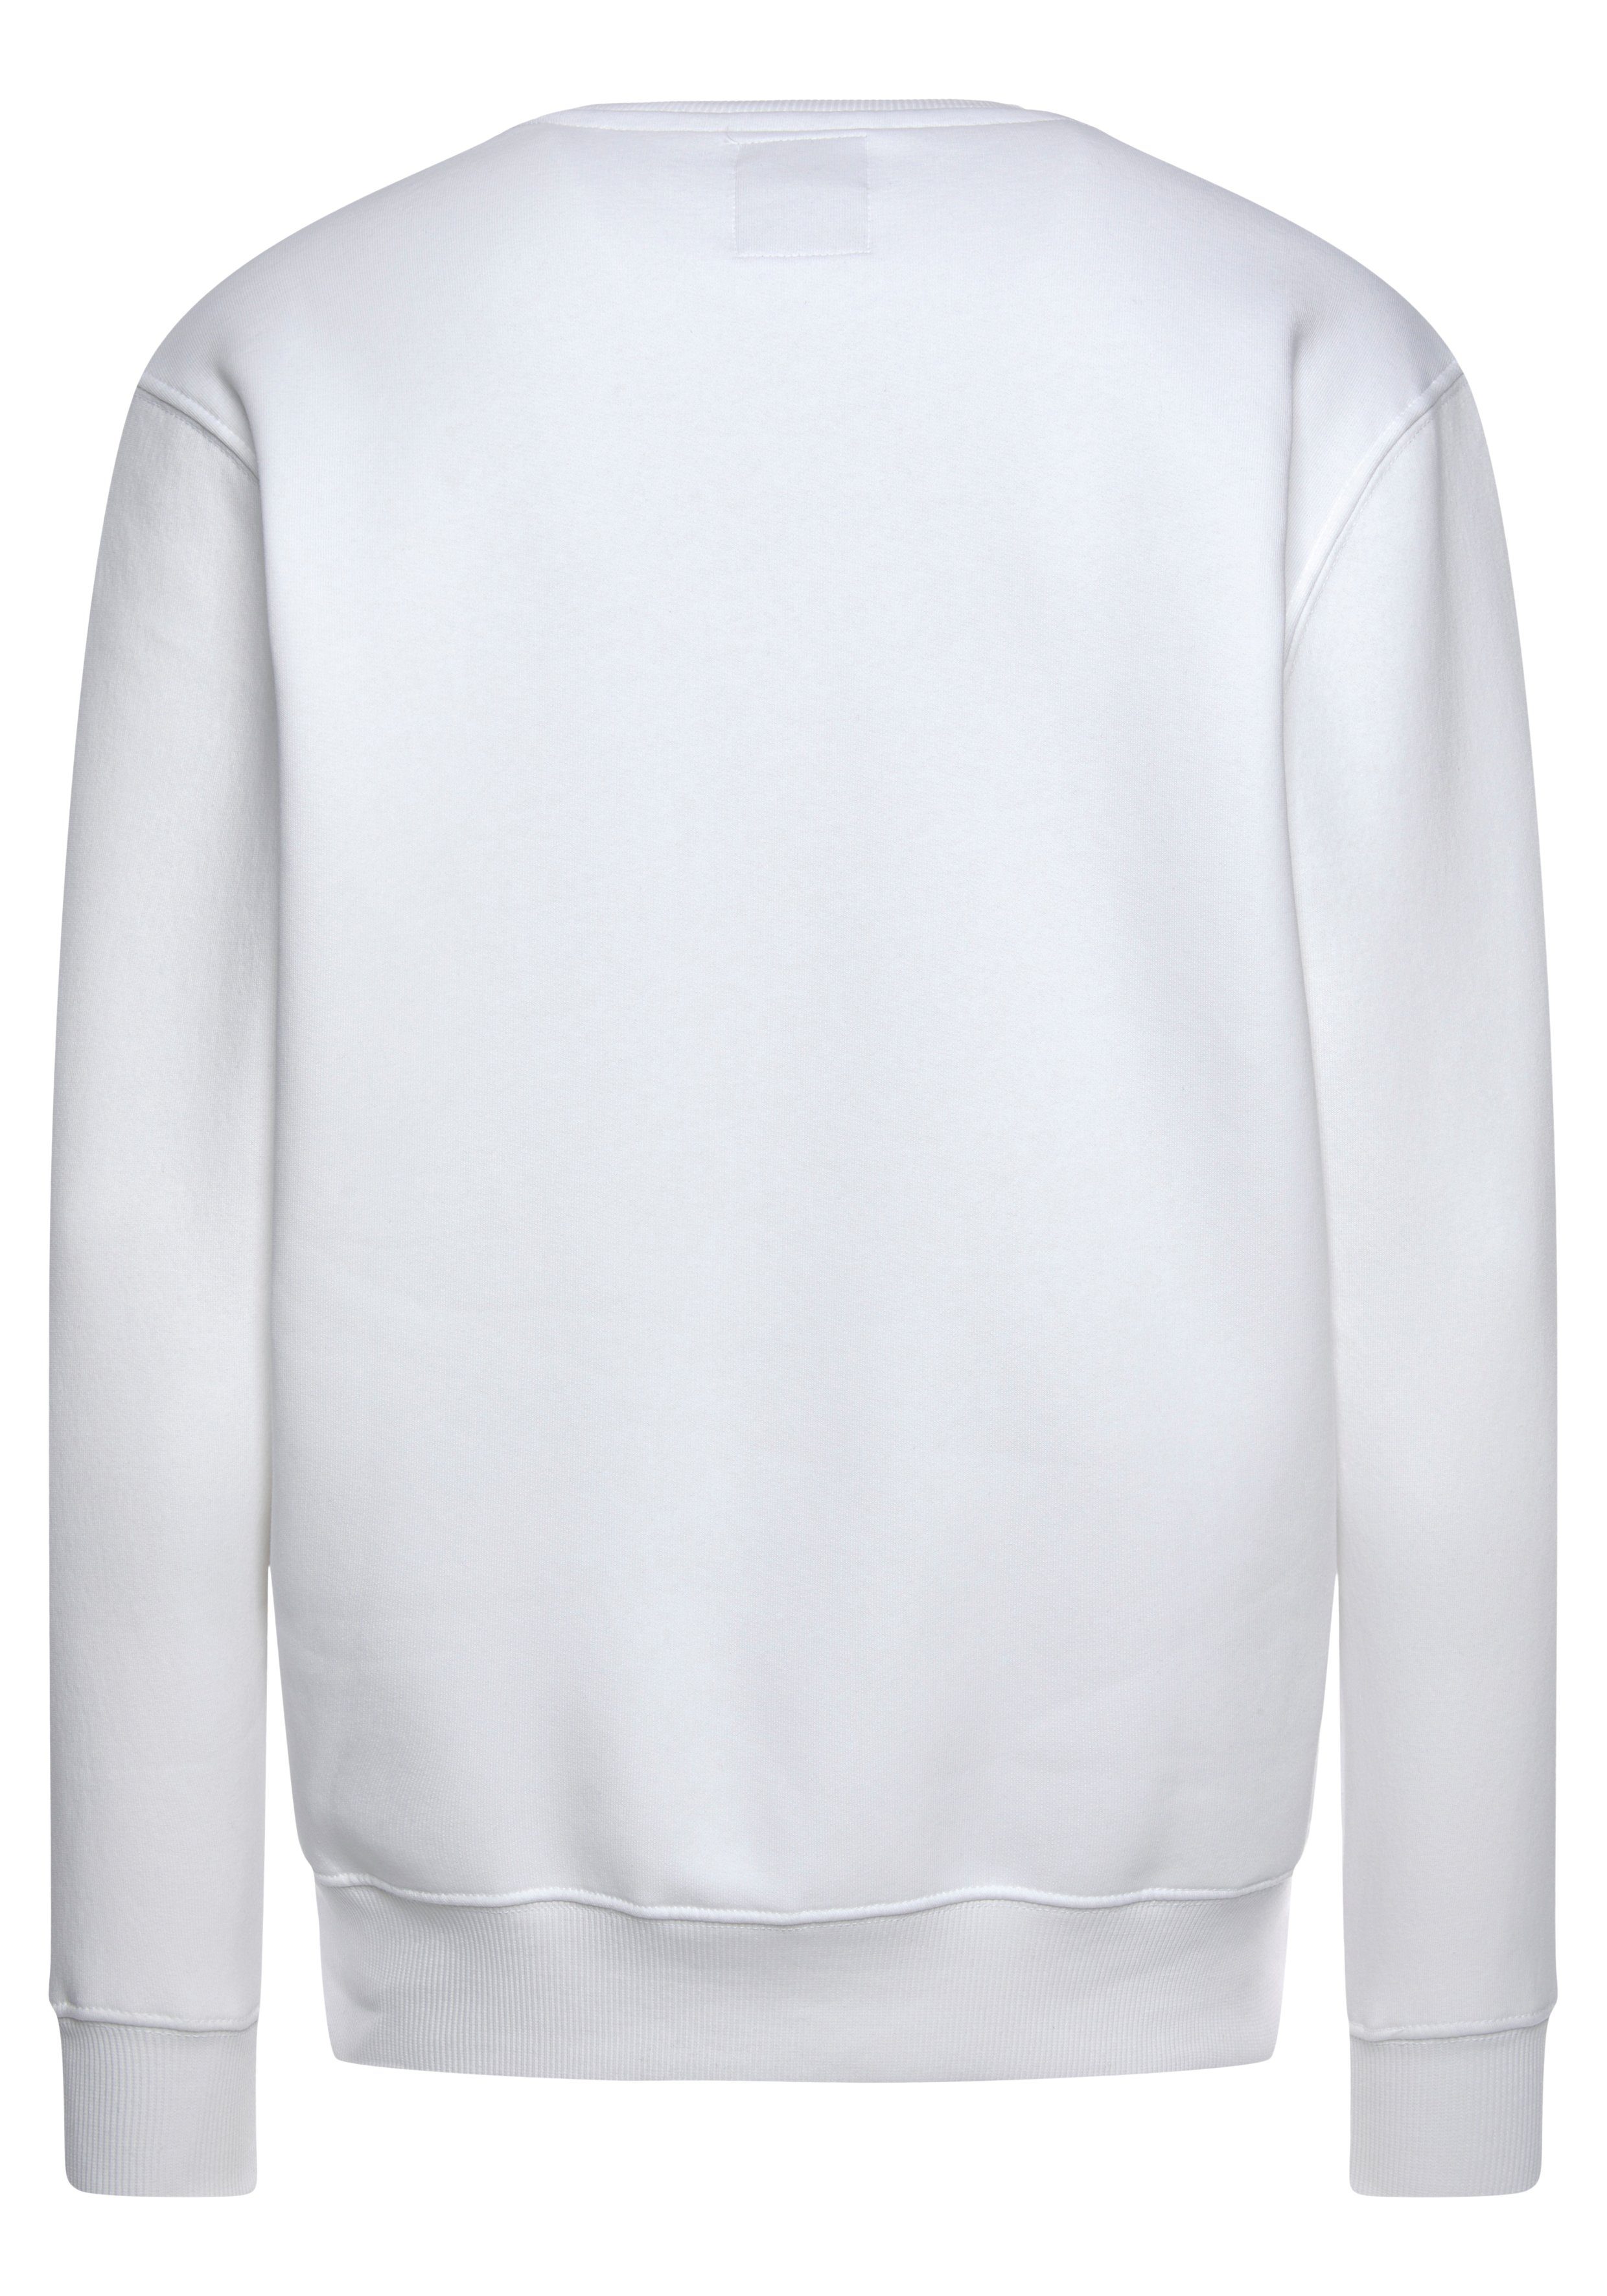 white Alpha Sweatshirt Industries Sweater Basic